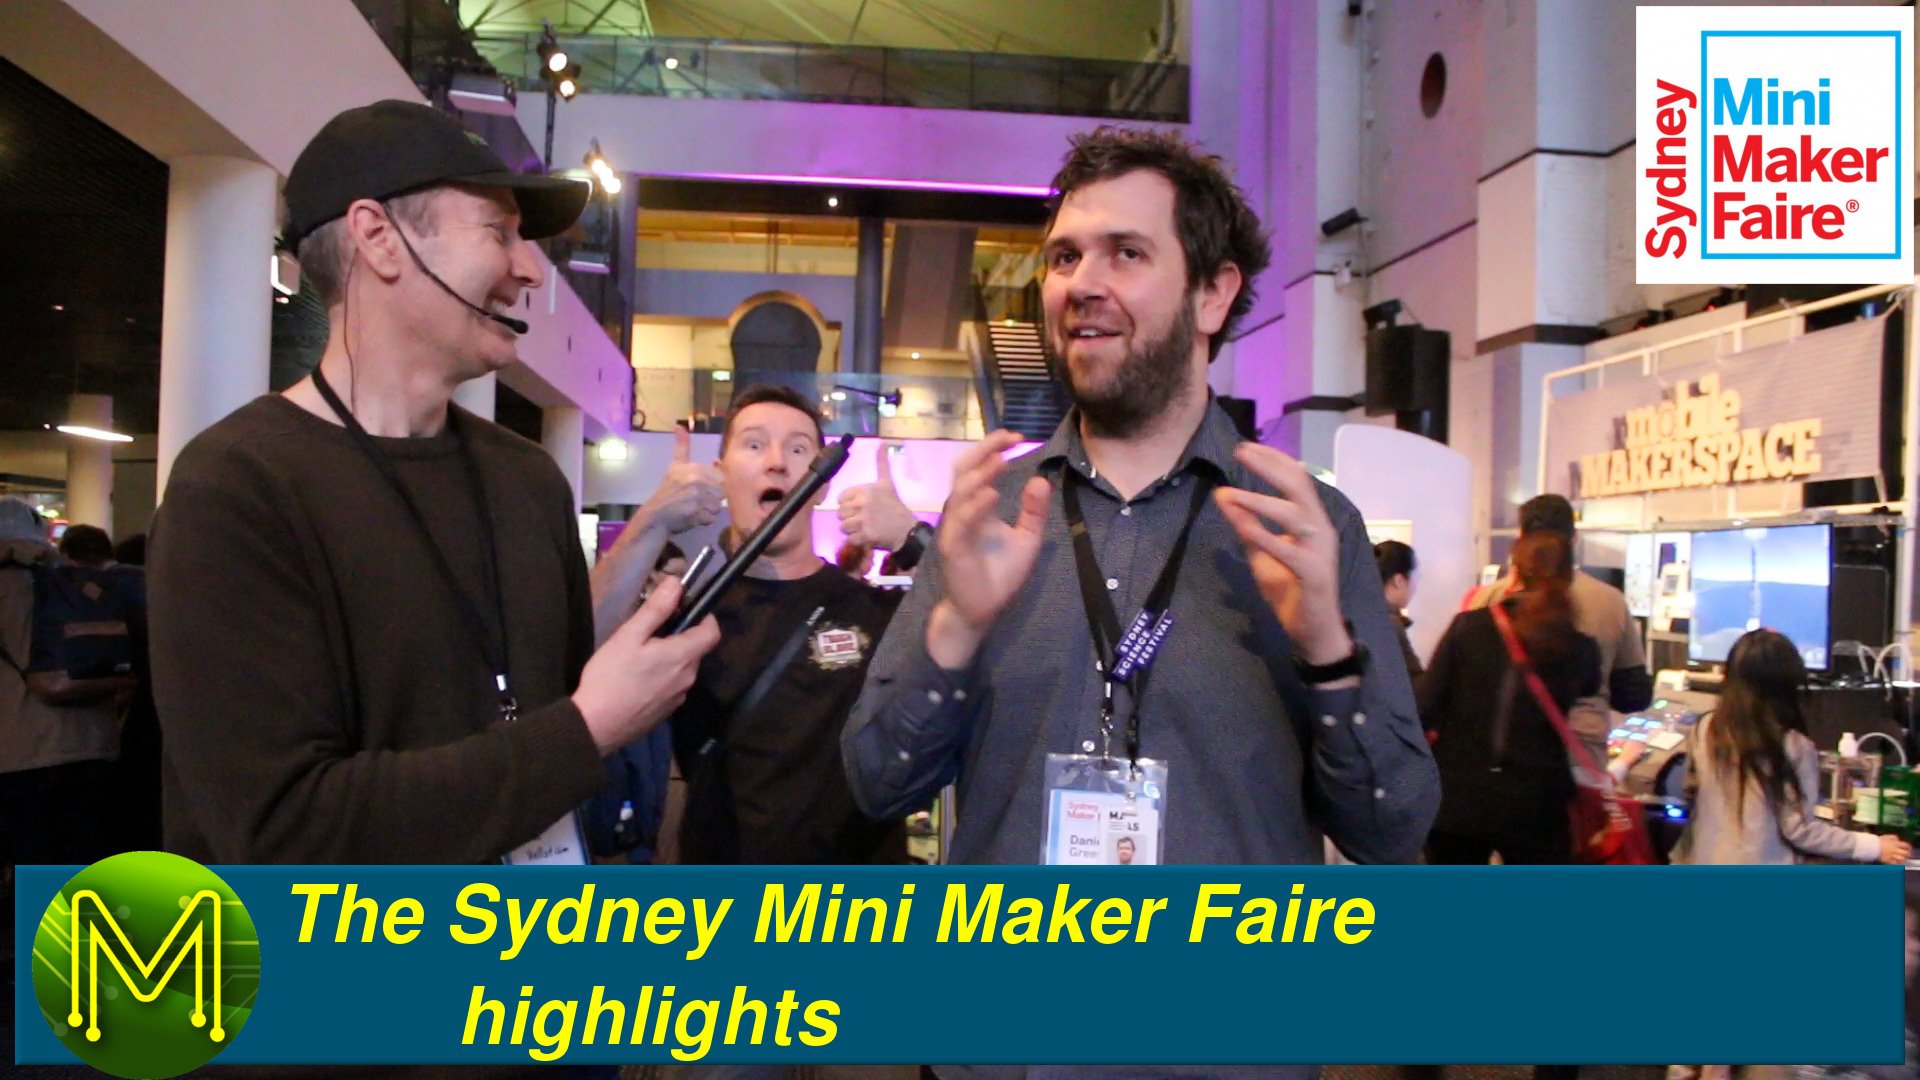 The Sydney Mini Maker Faire highlights